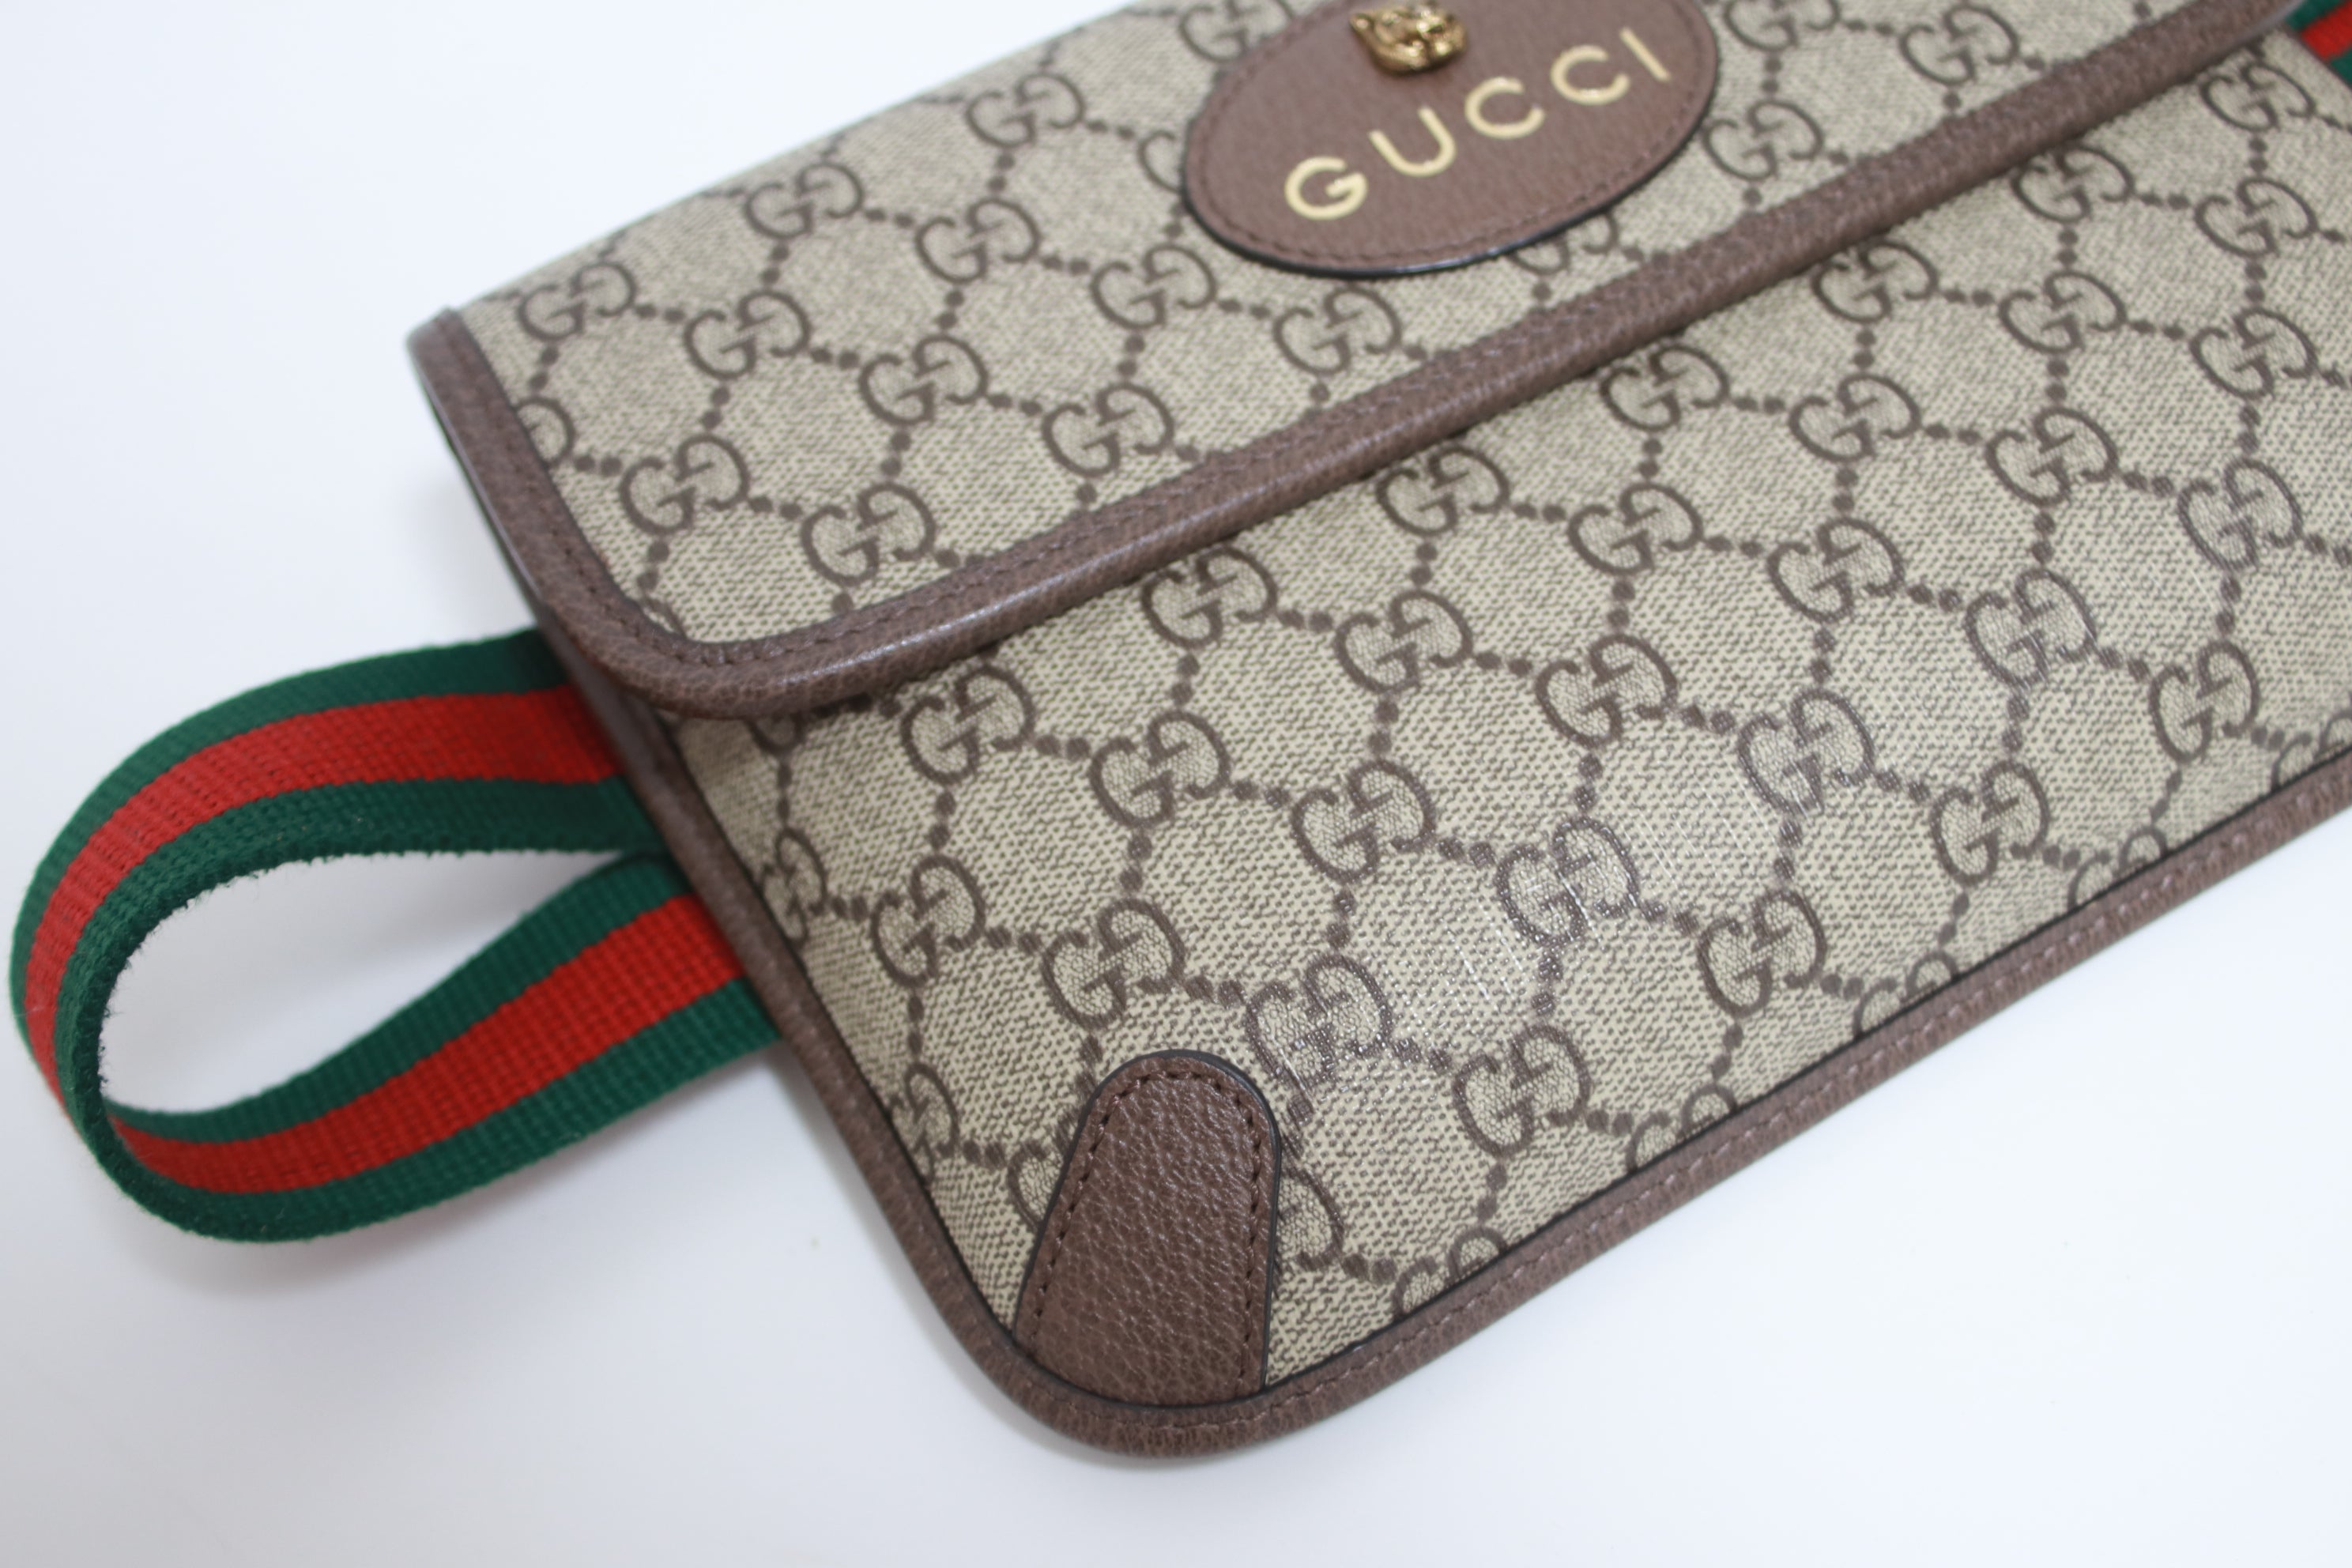 Gucci Neo Belt Bag Used (8303)